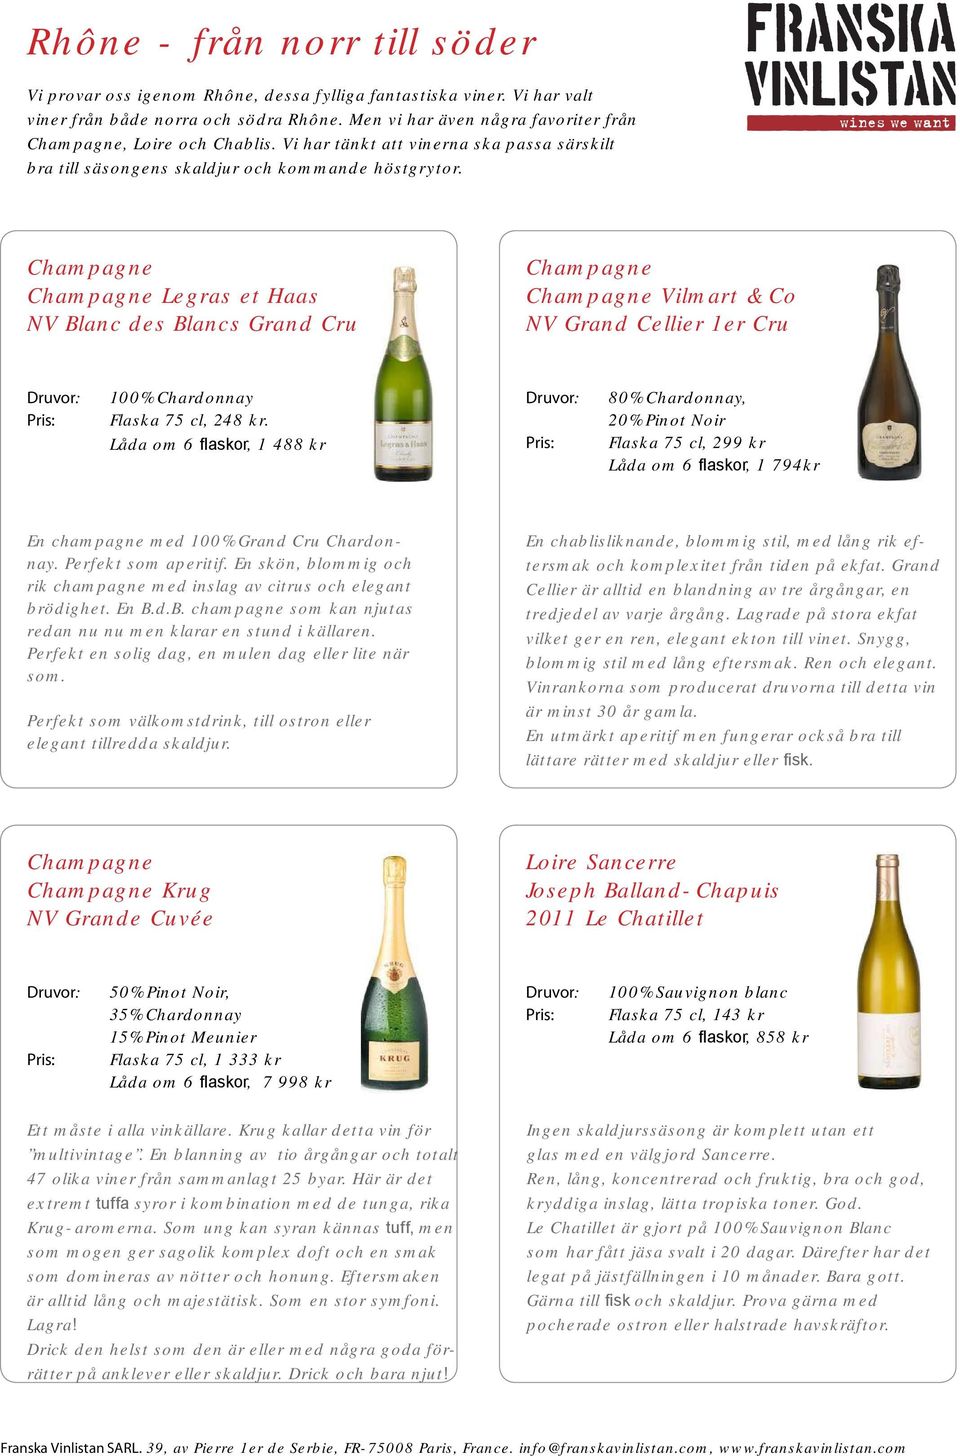 Legras et Haas NV Blanc des Blancs Grand Cru Vilmart & Co NV Grand Cellier 1er Cru 100% Chardonnay Flaska 75 cl, 248 kr.